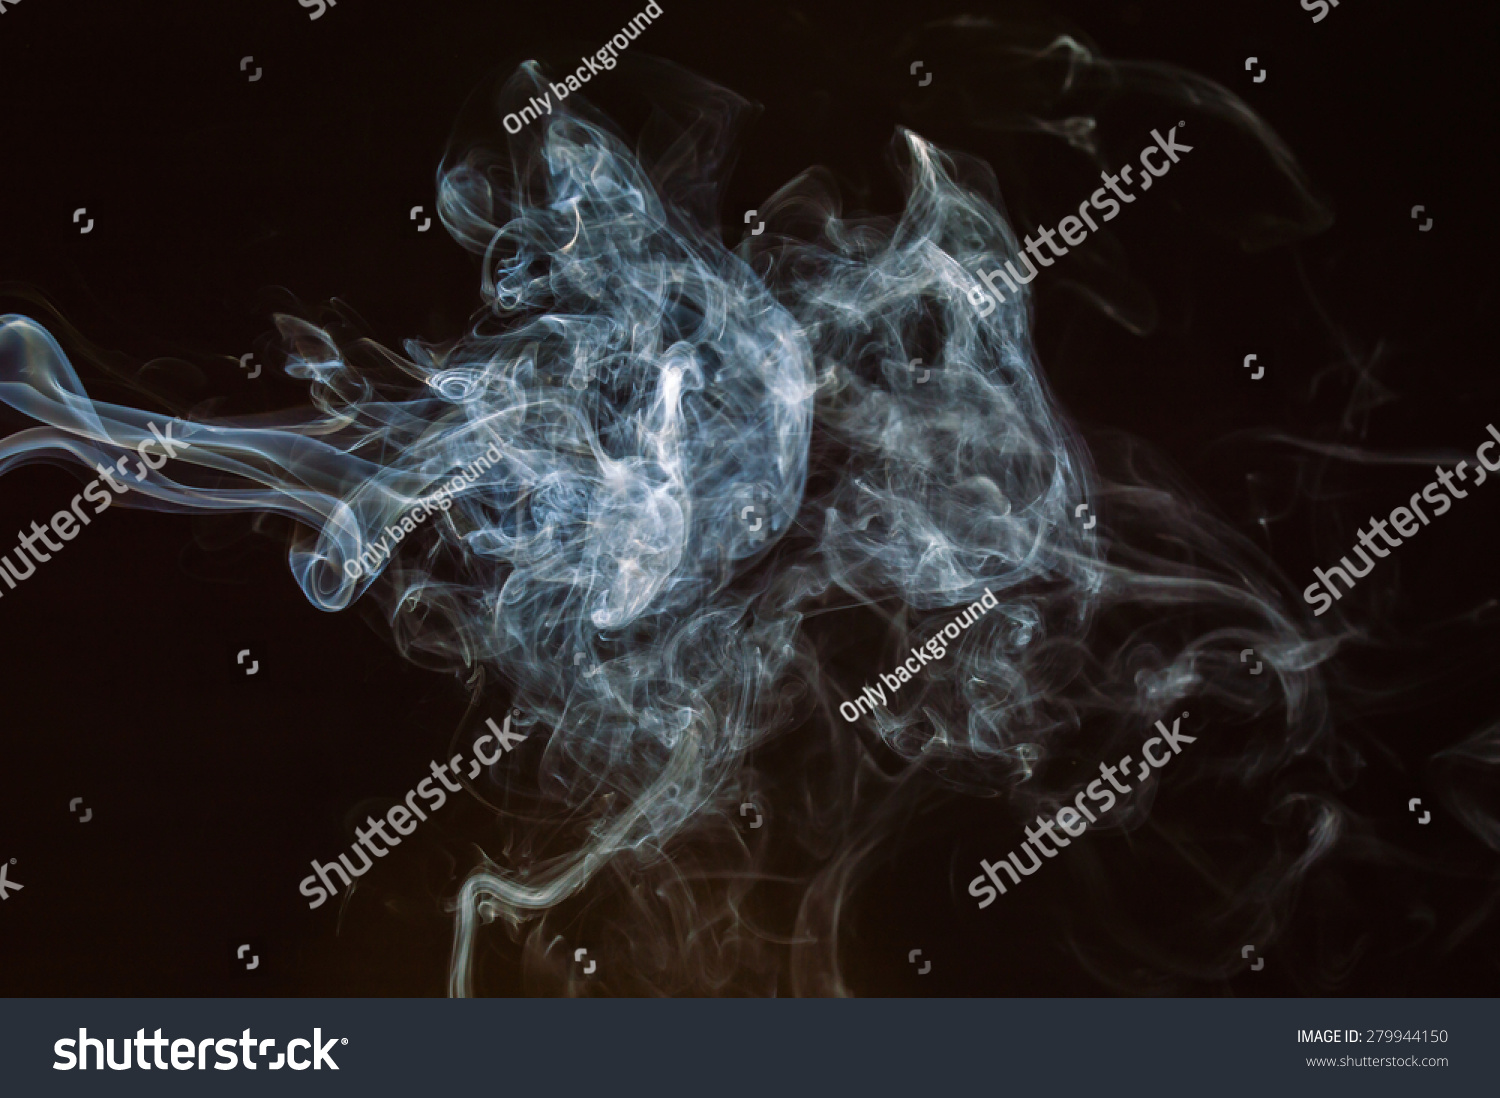 Edit Photos Free Online - Smoke background | Shutterstock Editor